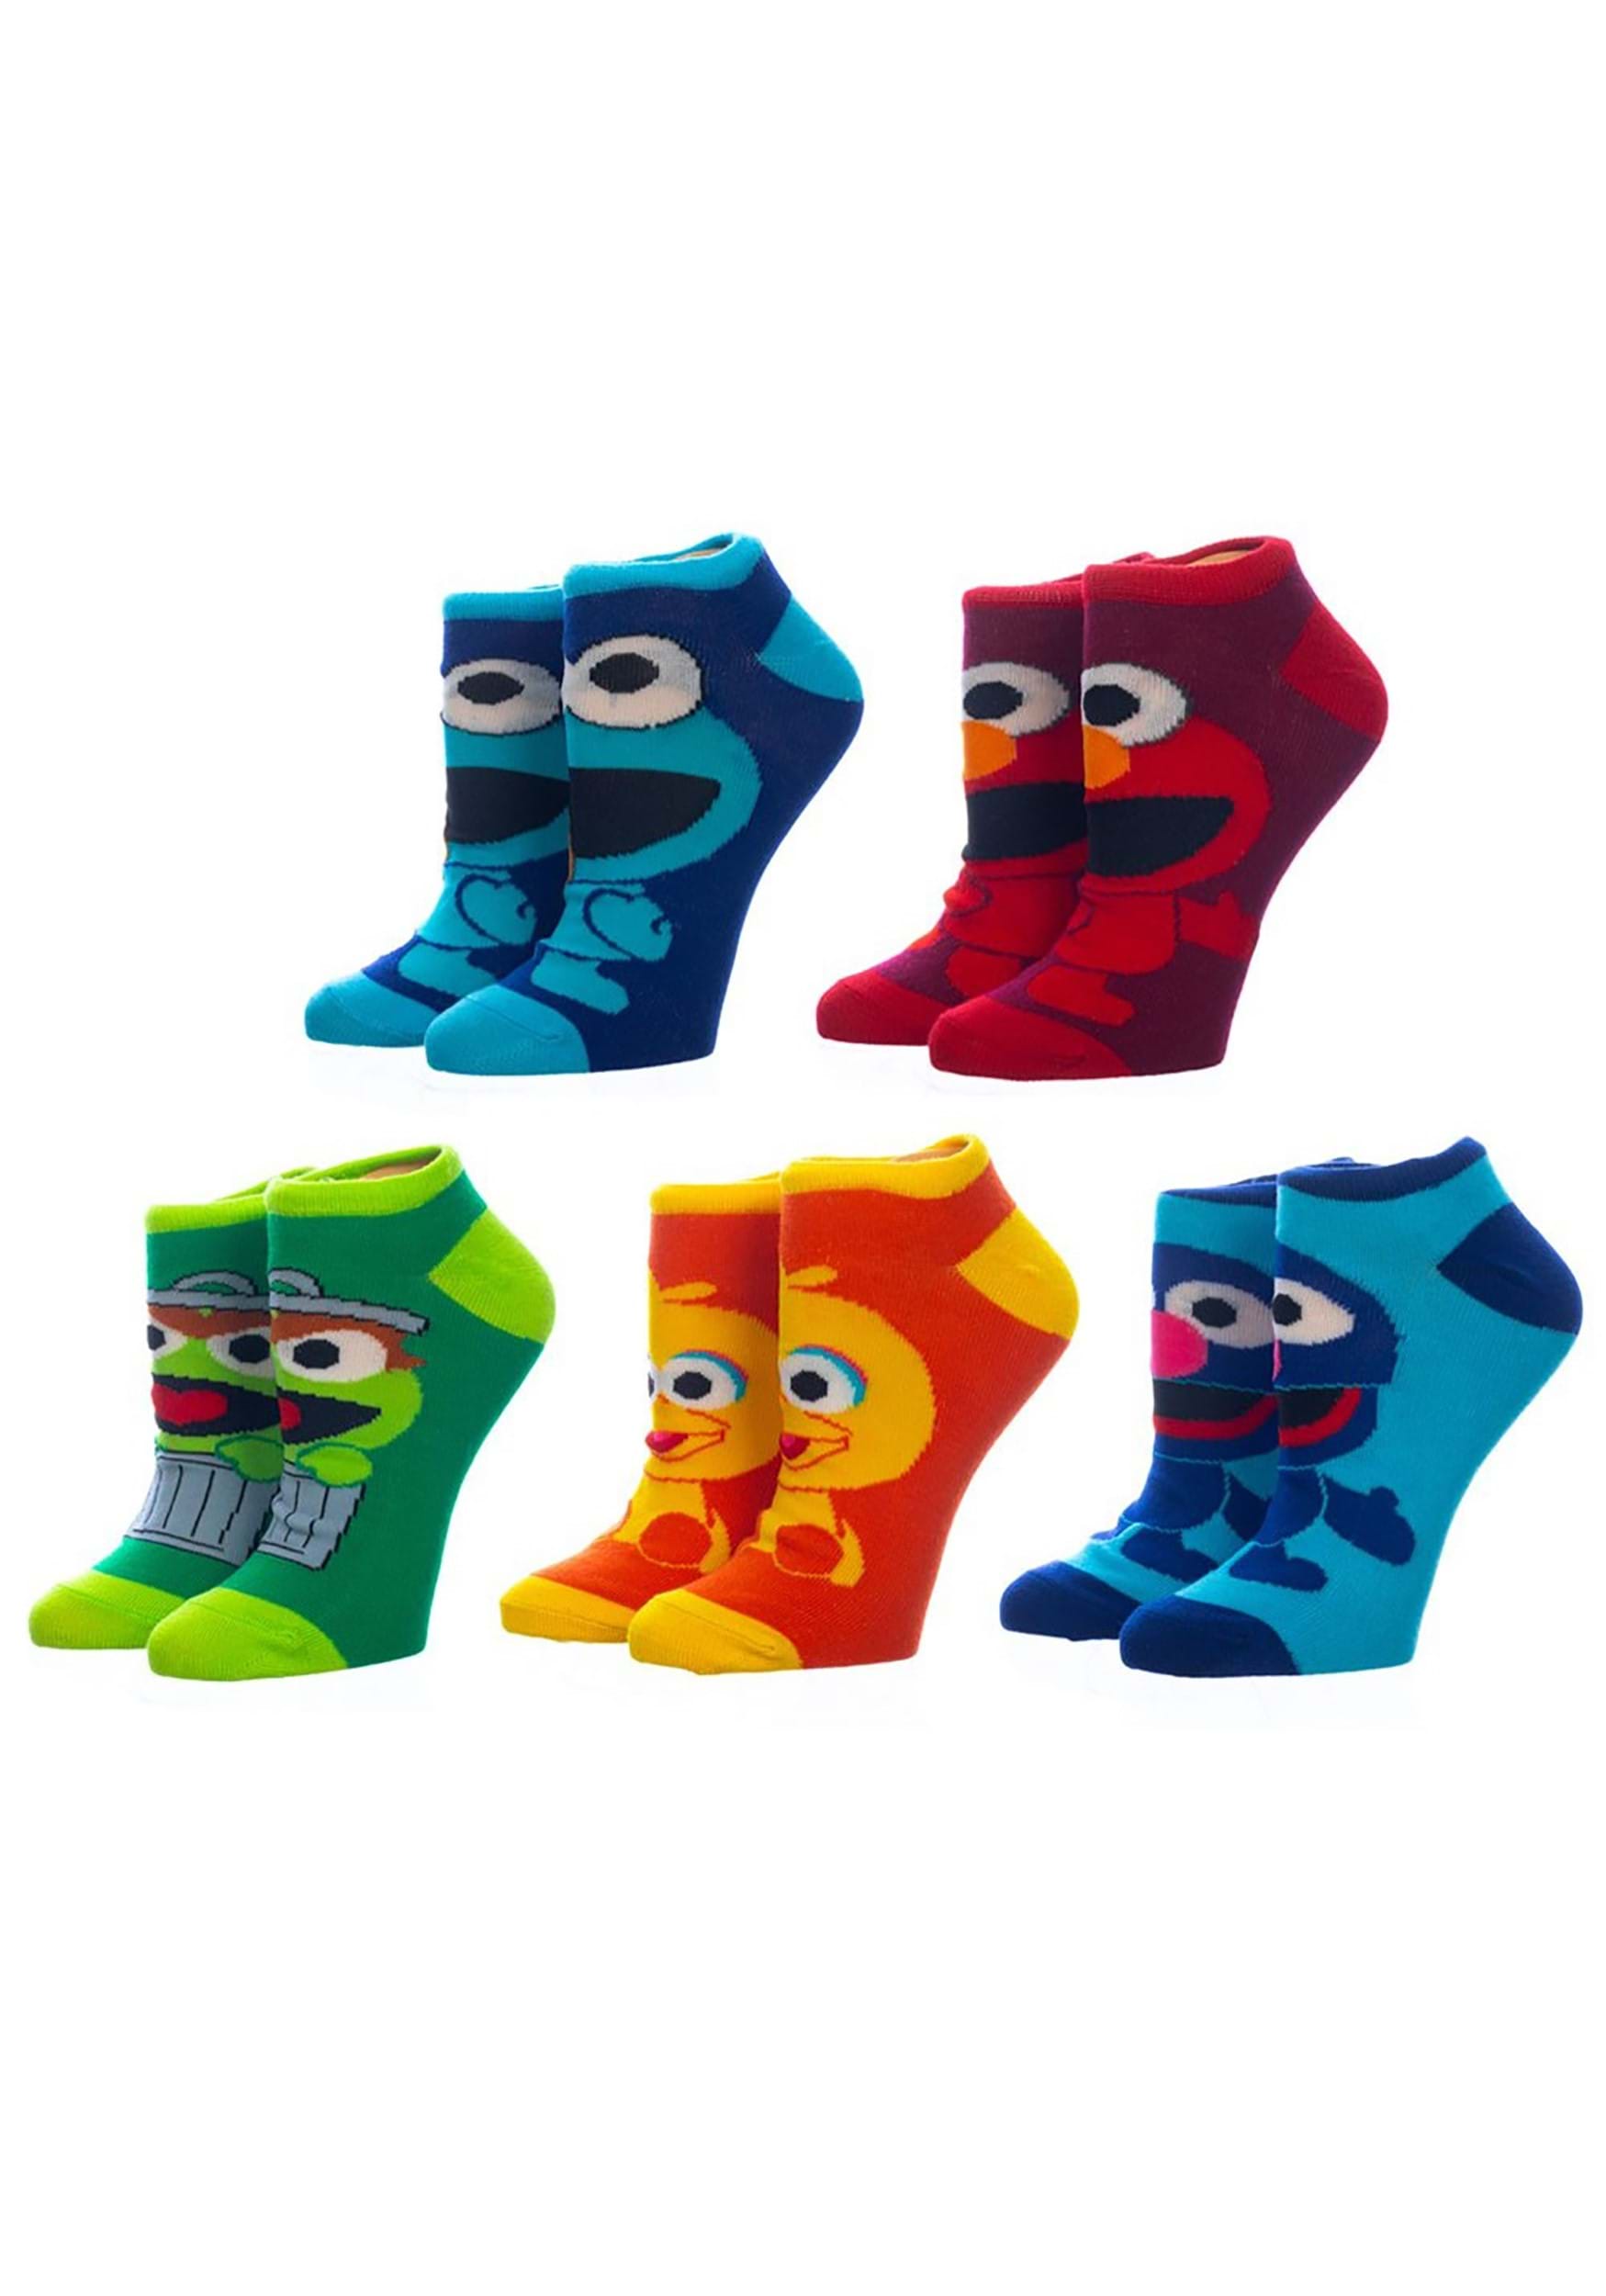 Shop for Sesame Street, Underwear & Socks